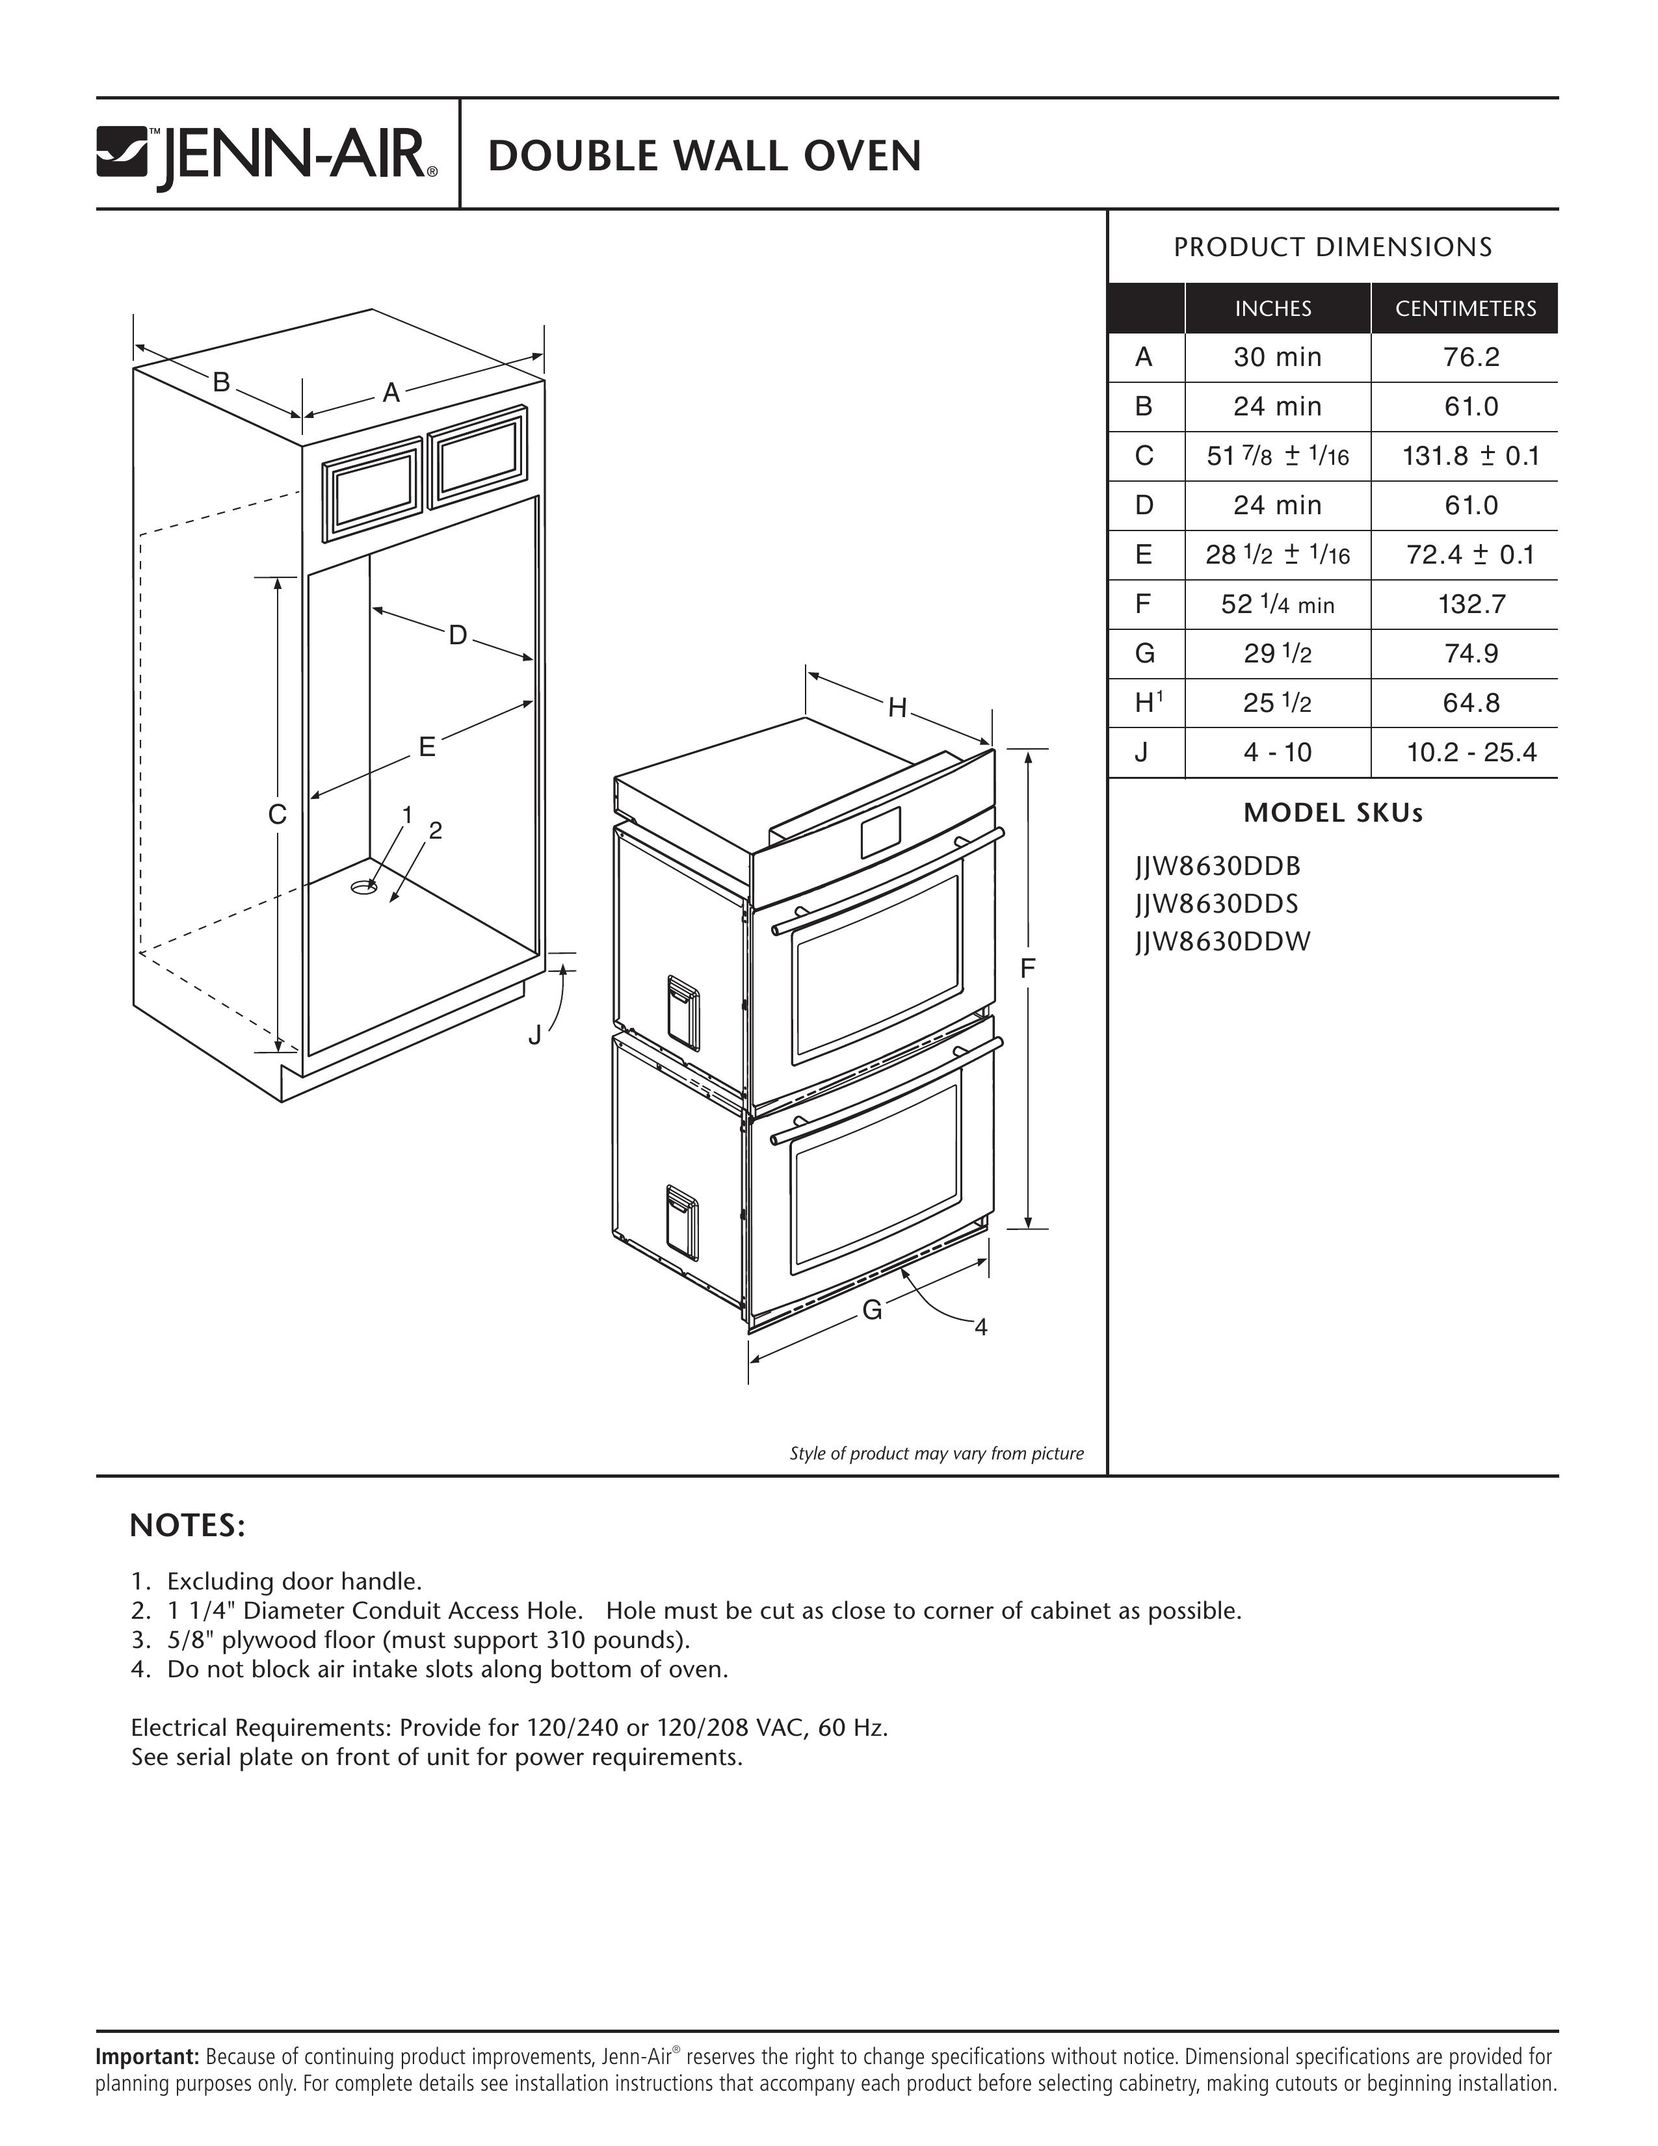 Jenn-Air JJW8630DDW Oven User Manual